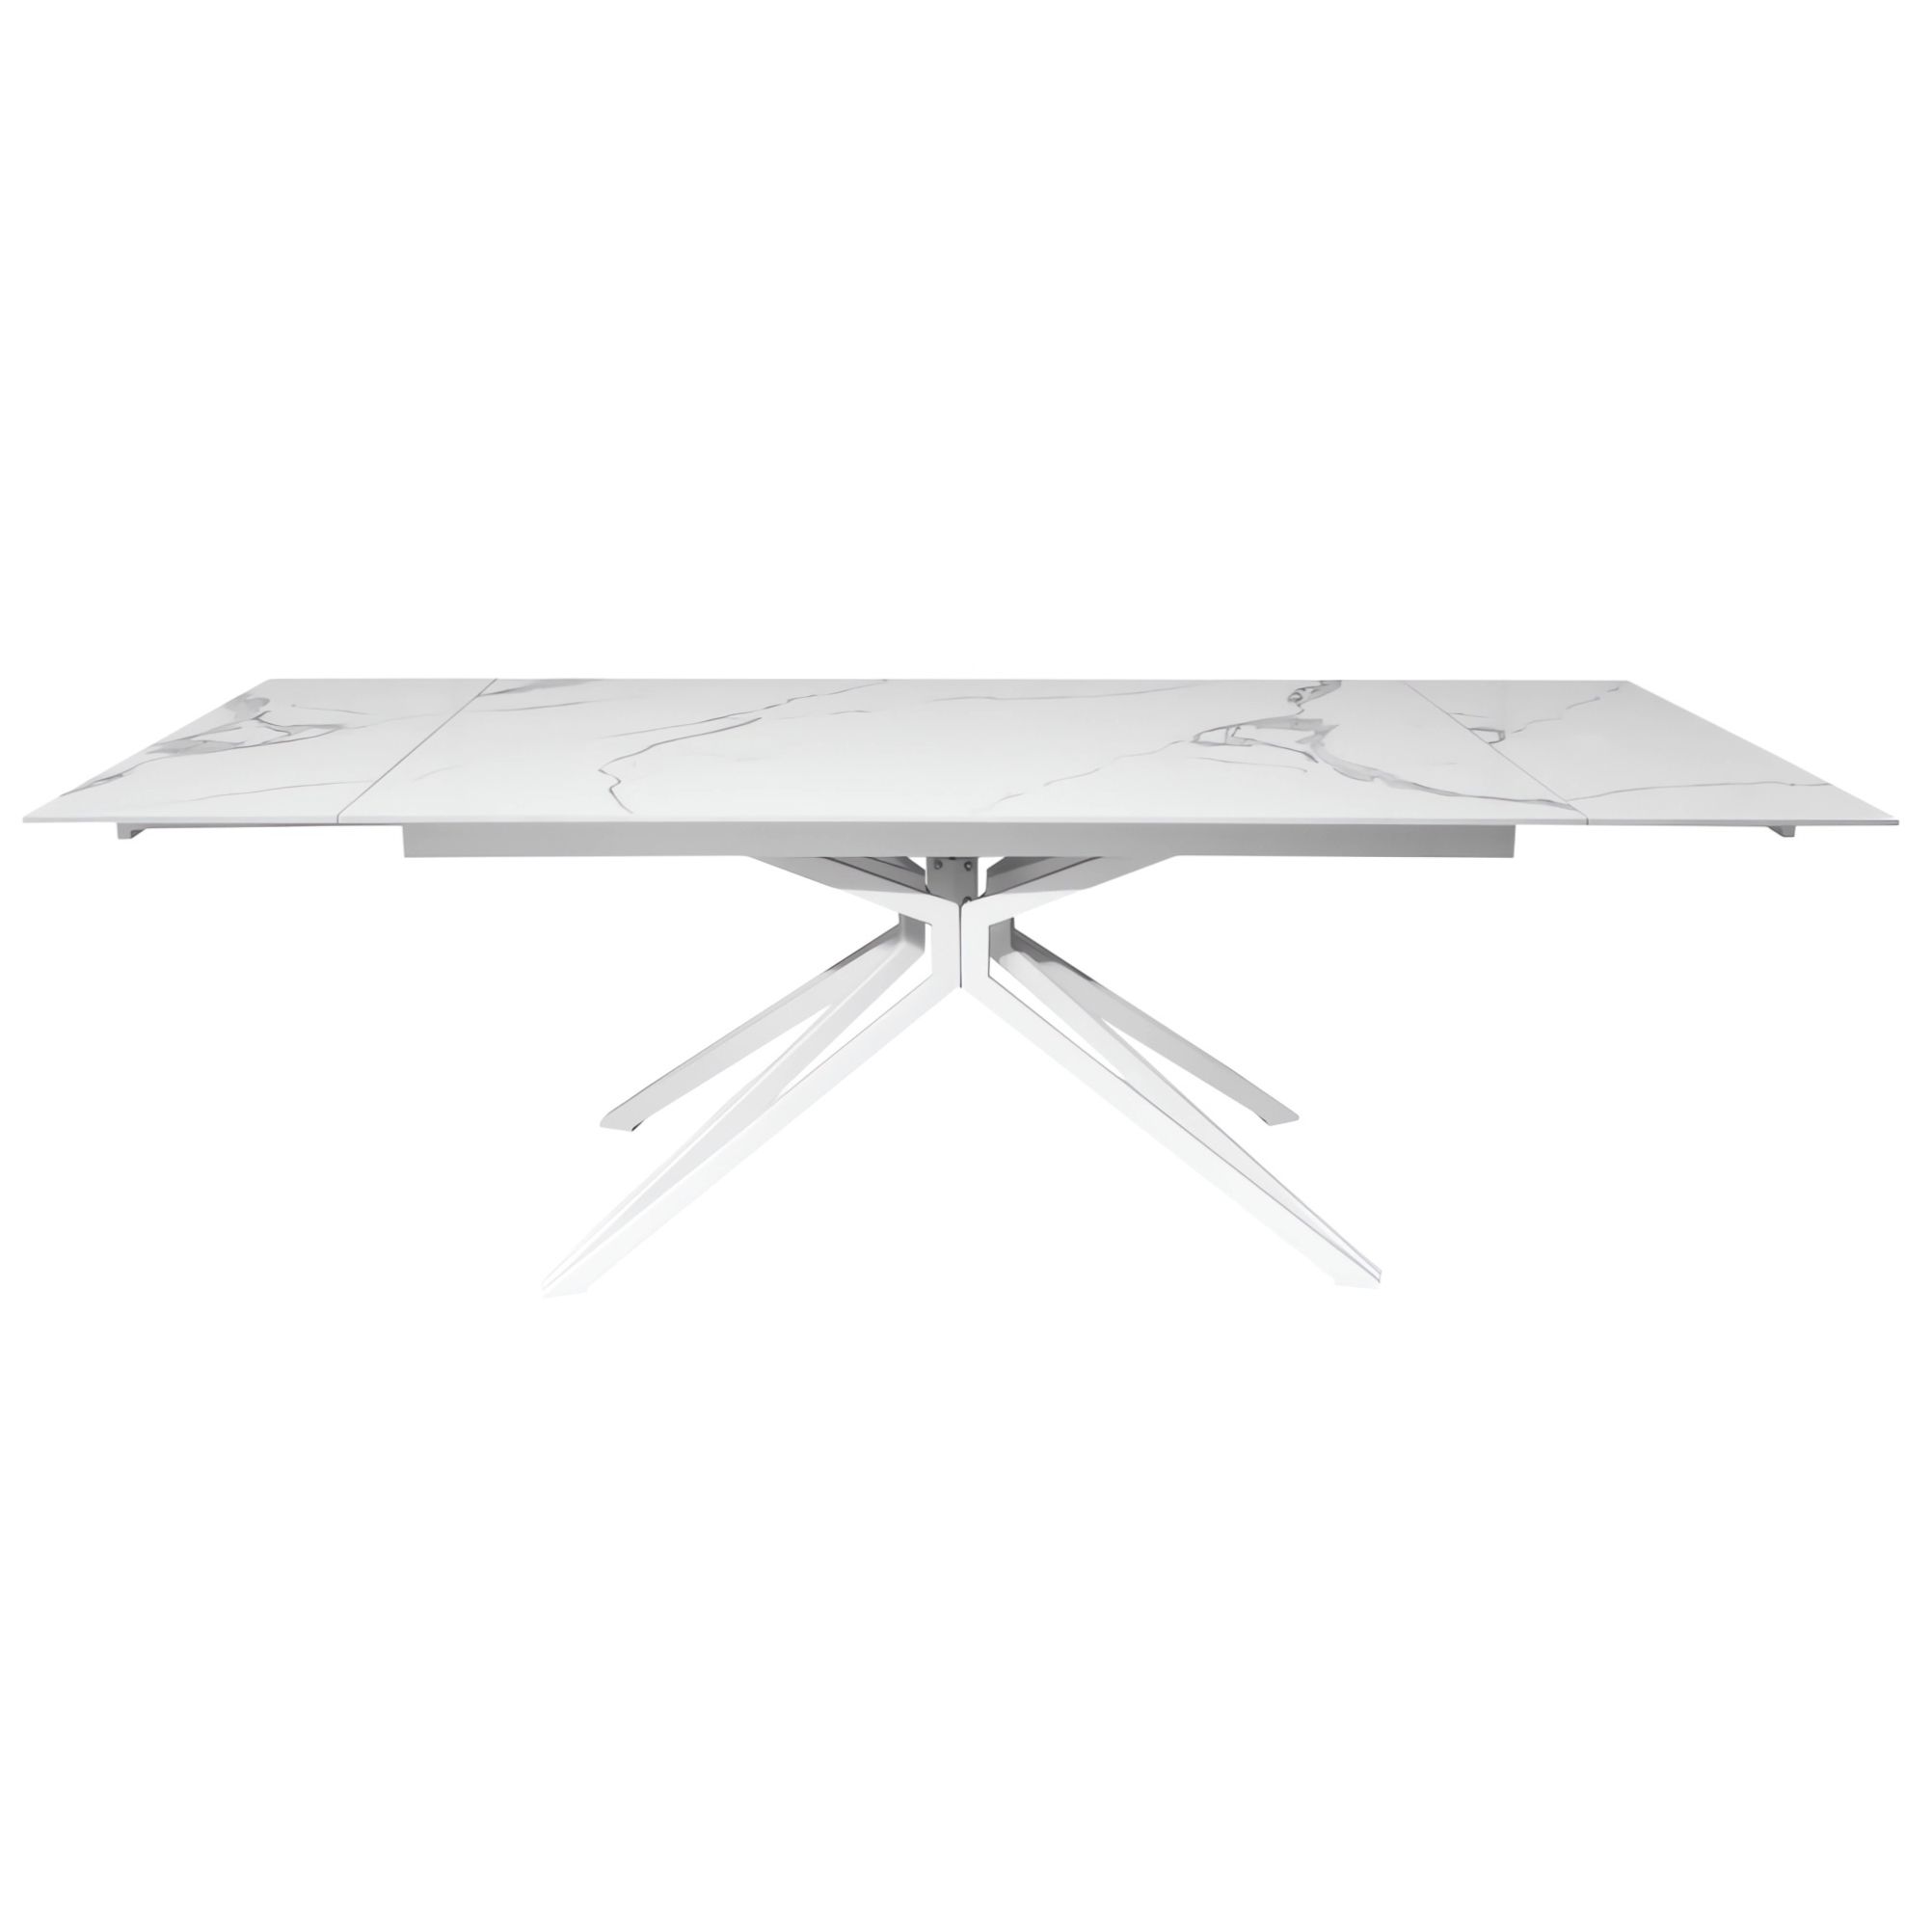 Star Staturario White стол раскладной керамика 160-240 см Concepto